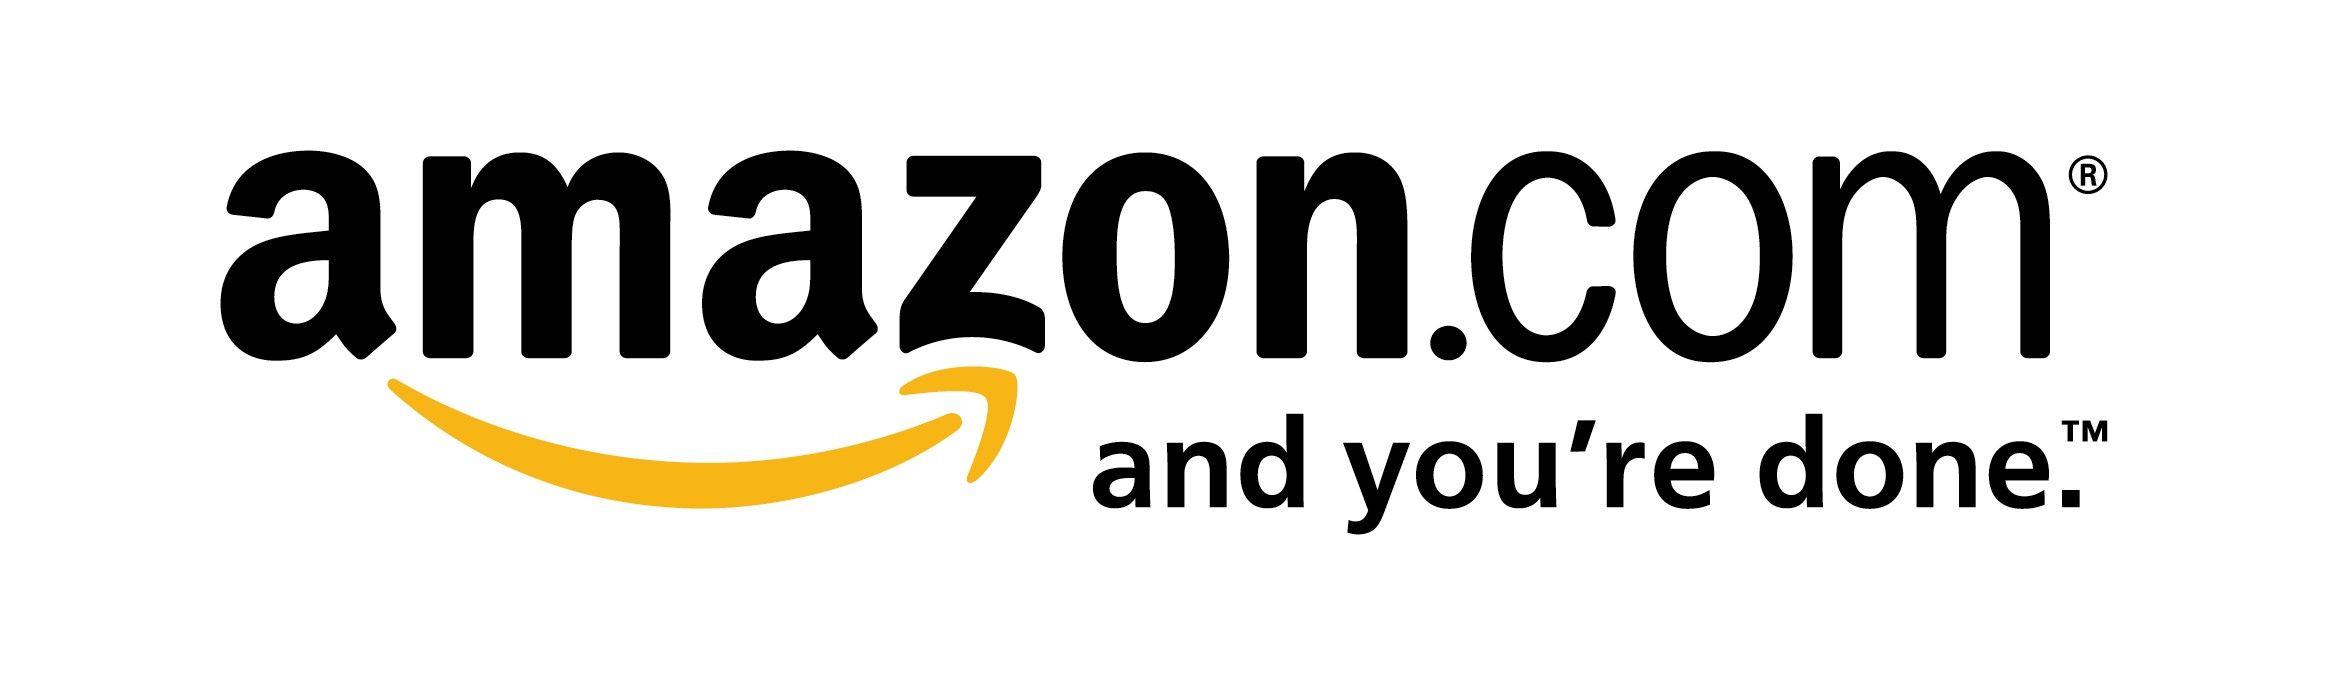 Amazon Old Logo - Amazon is 20 Years Old | Network Intellect